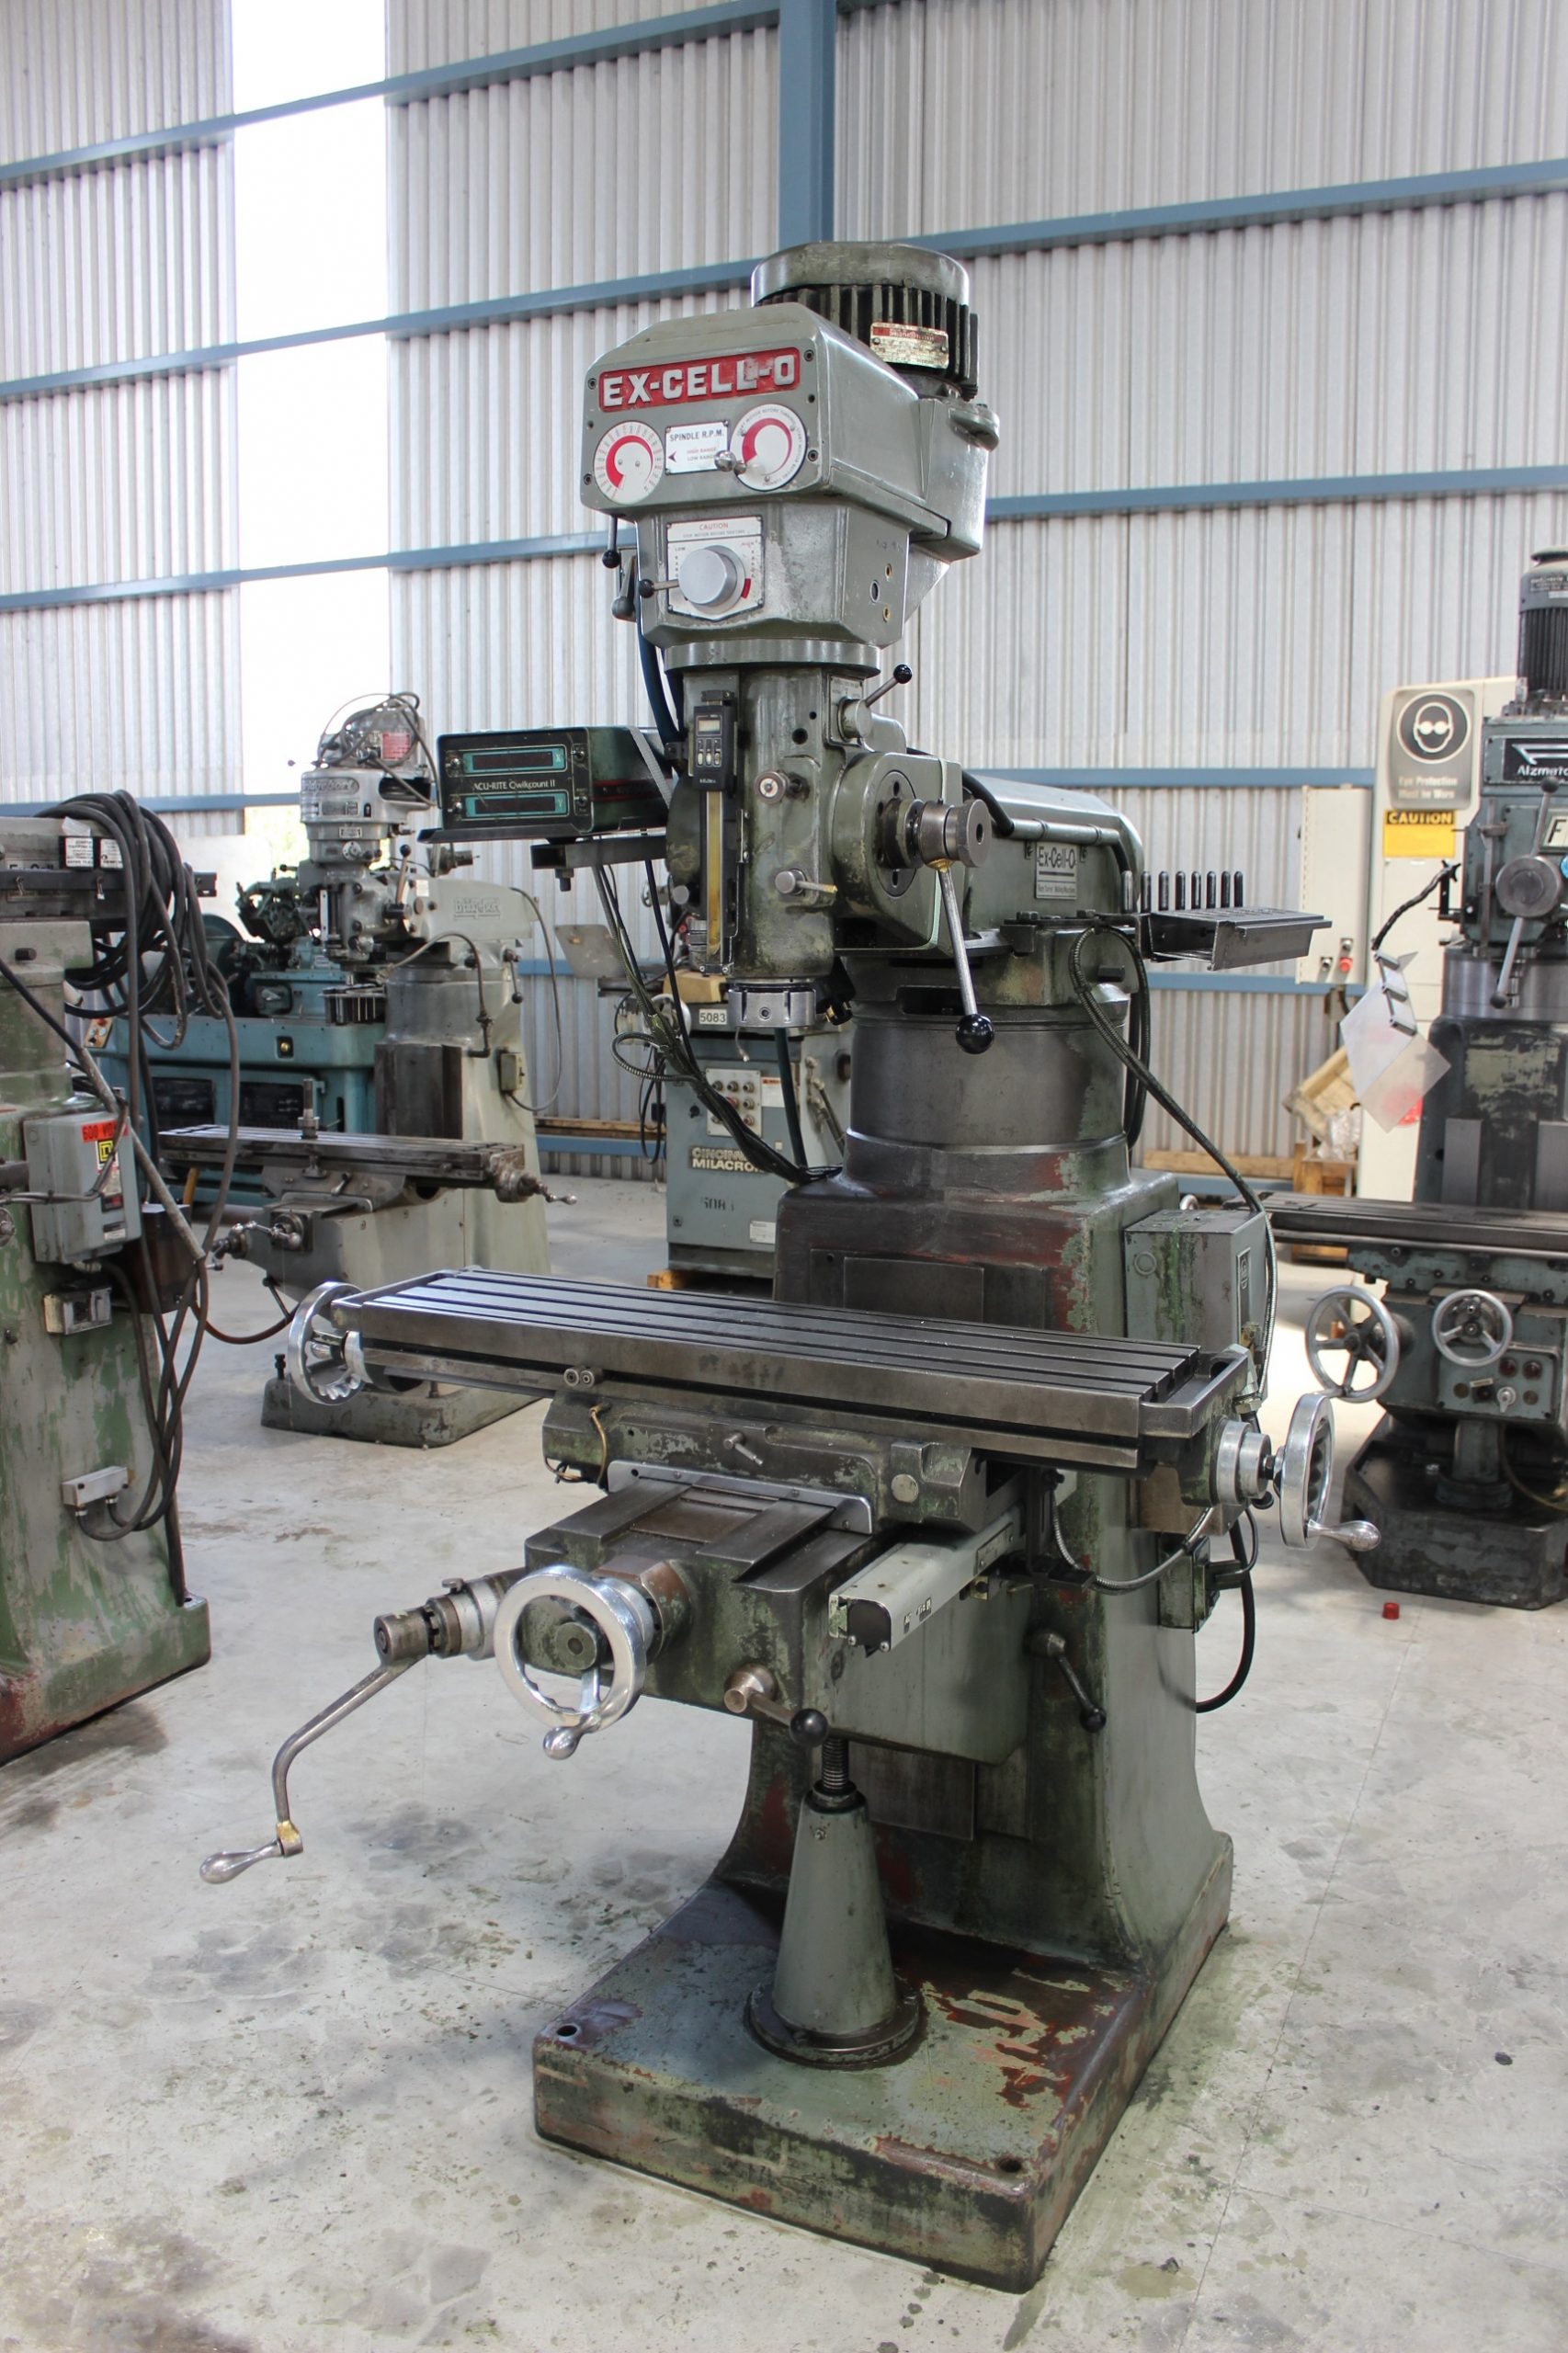 bridgeport milling machine for sale canada